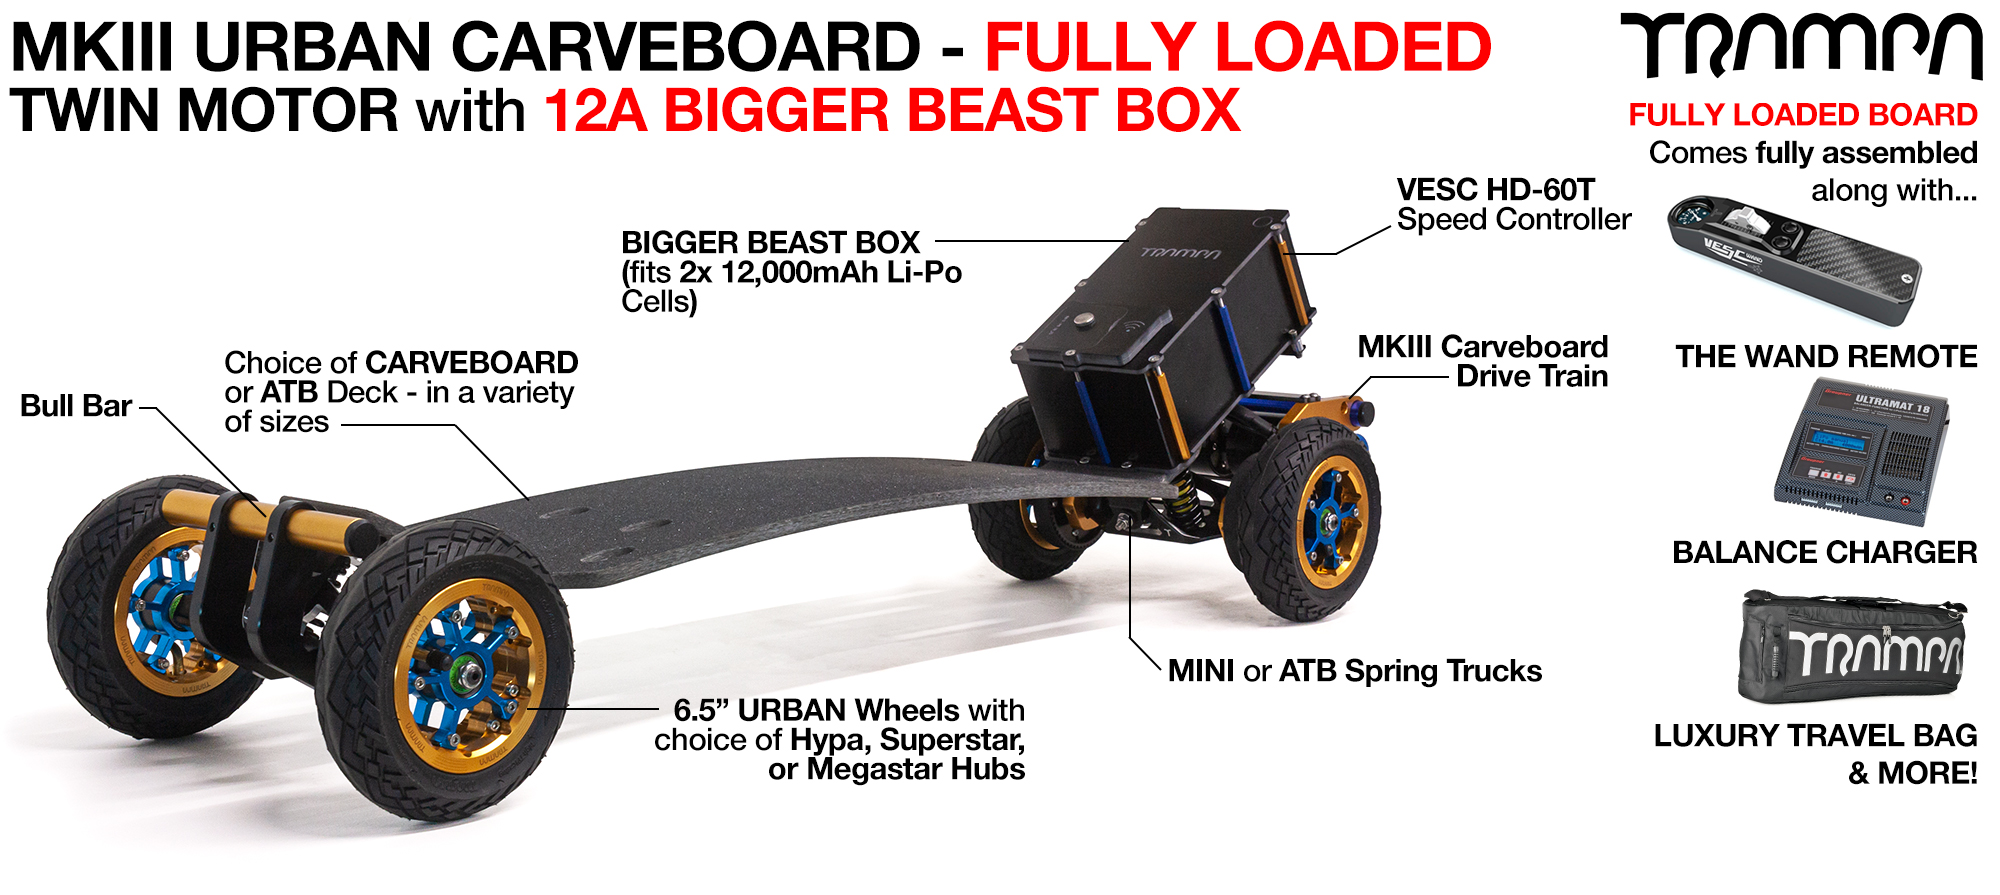 TRAMPA's MkIII Electric URBAN Carveboard - uses Mini Spring Trucks with MkIII Carve board Motor Mounts Custom TRAMPA hubs & 125mm URBAN longboard Tyres - TWIN Motor FULLY LOADED